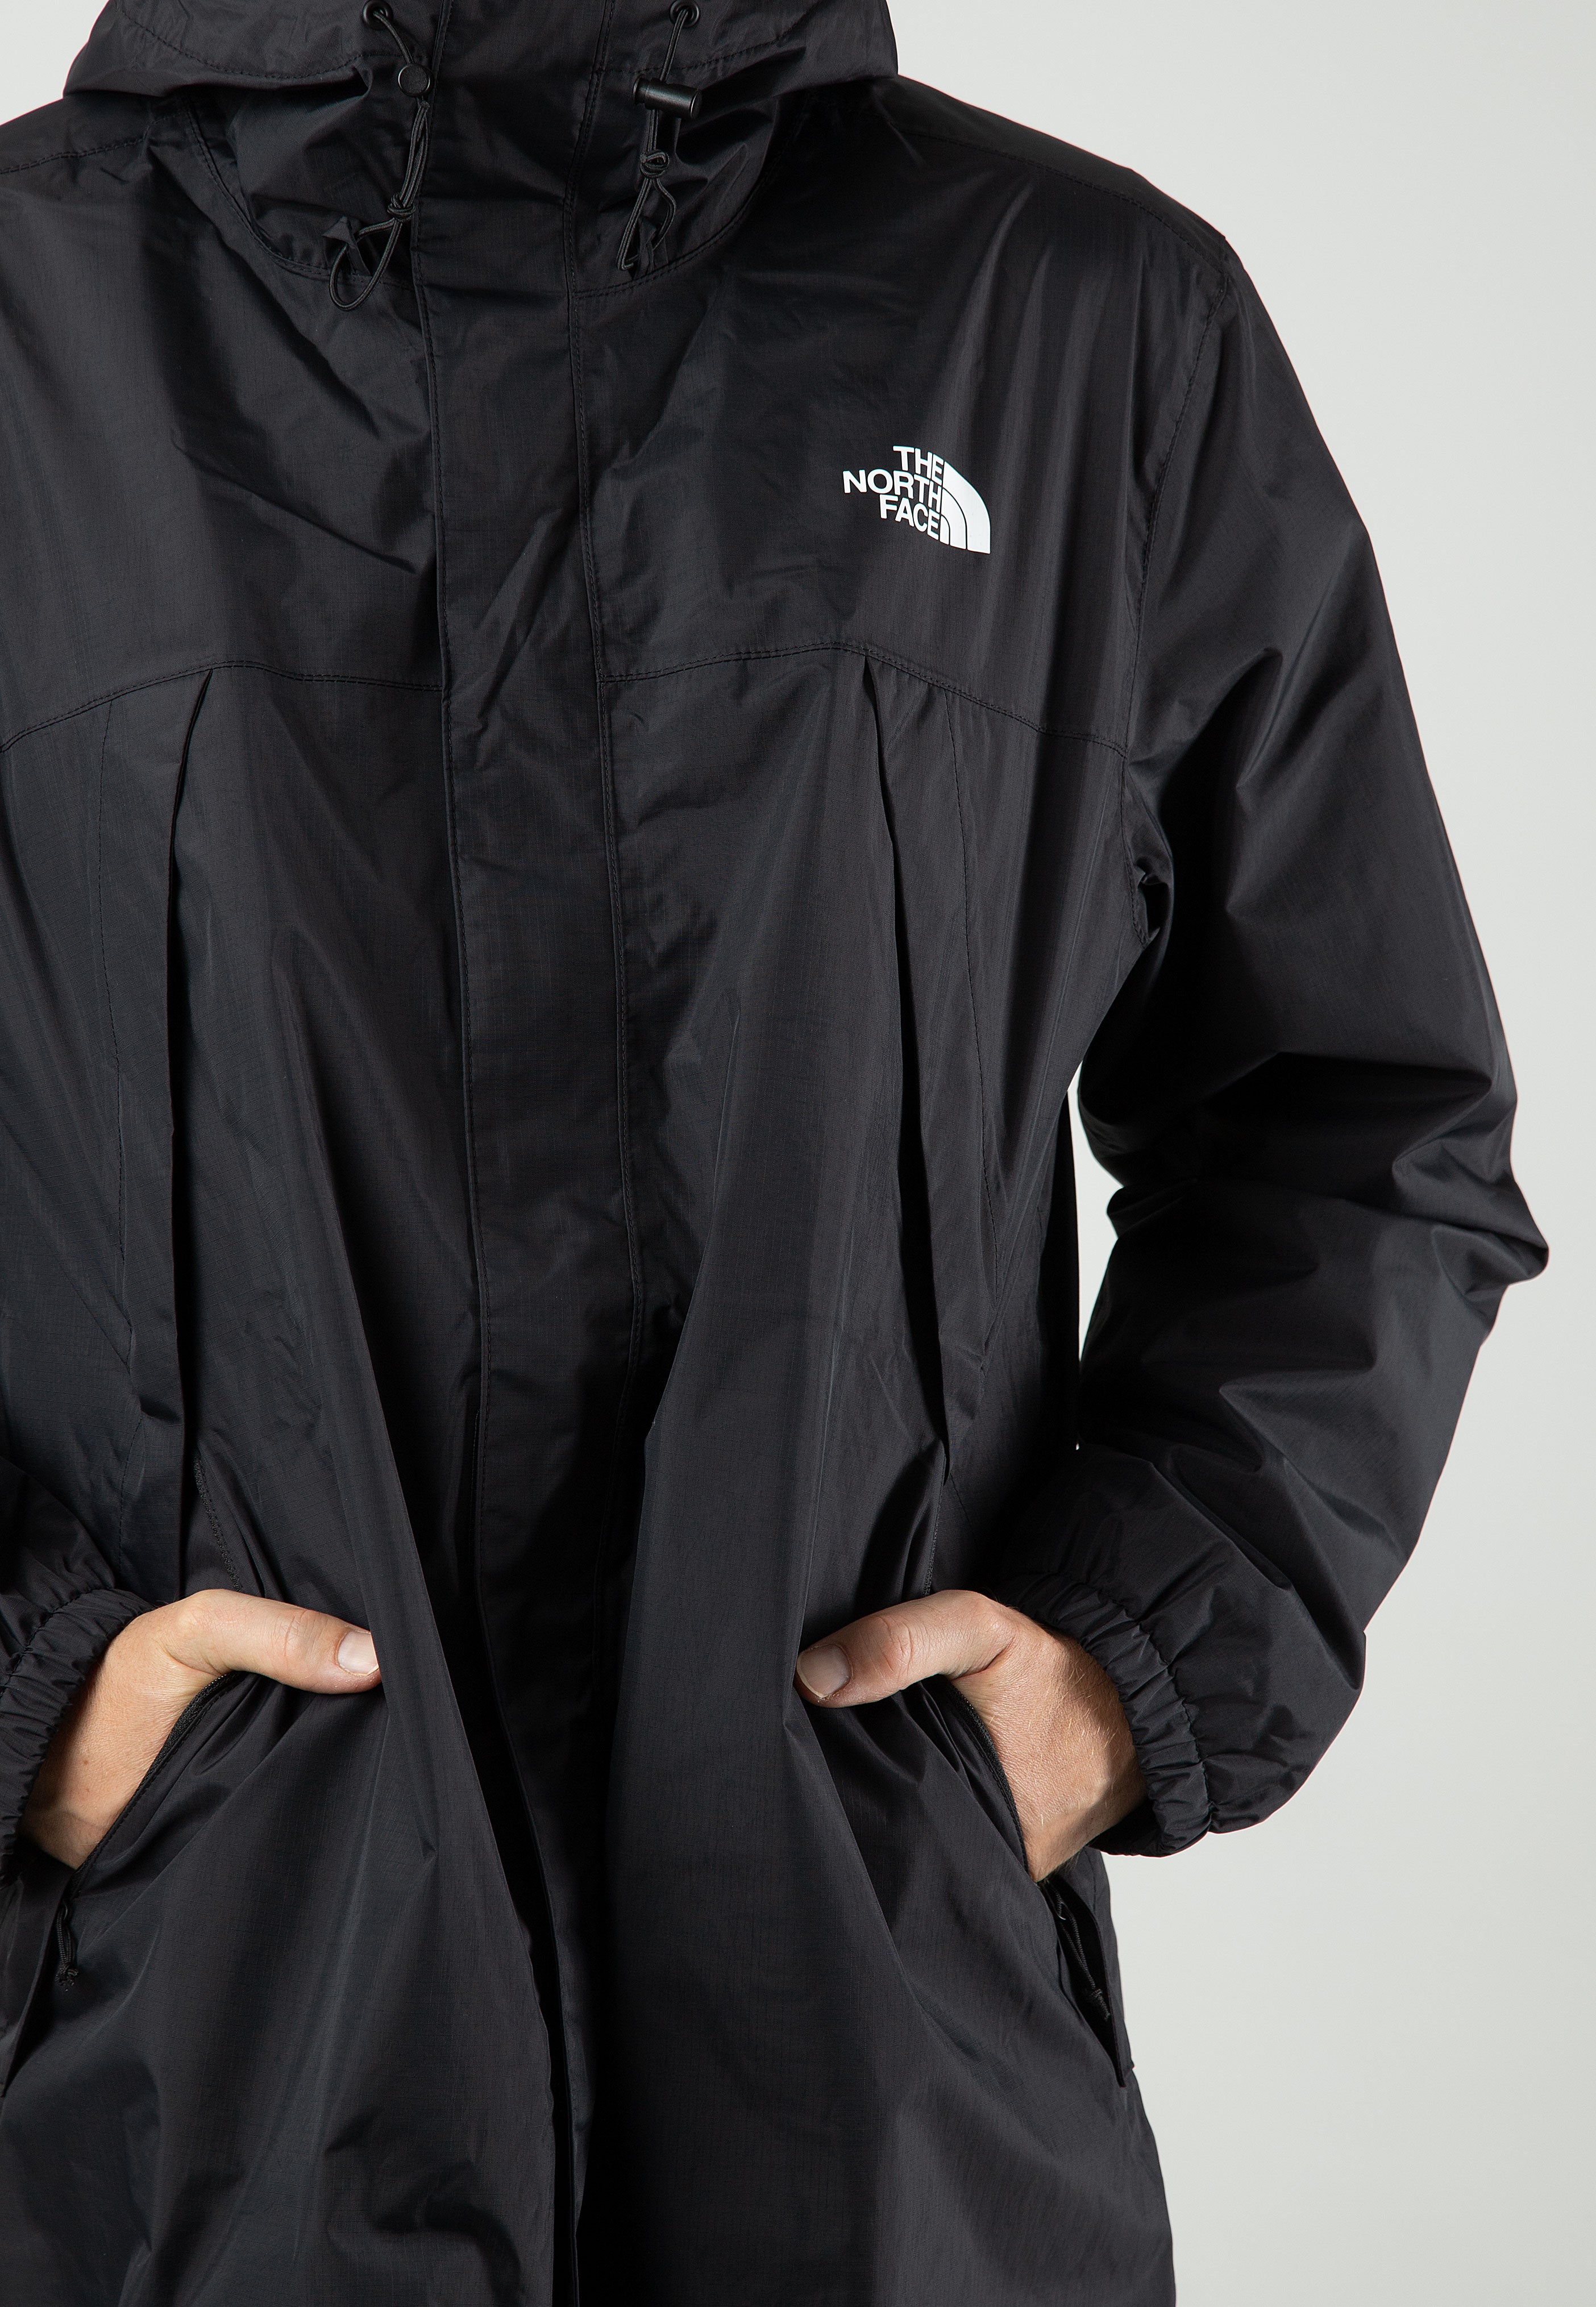 The North Face - Antora Tnf Black - Jacket